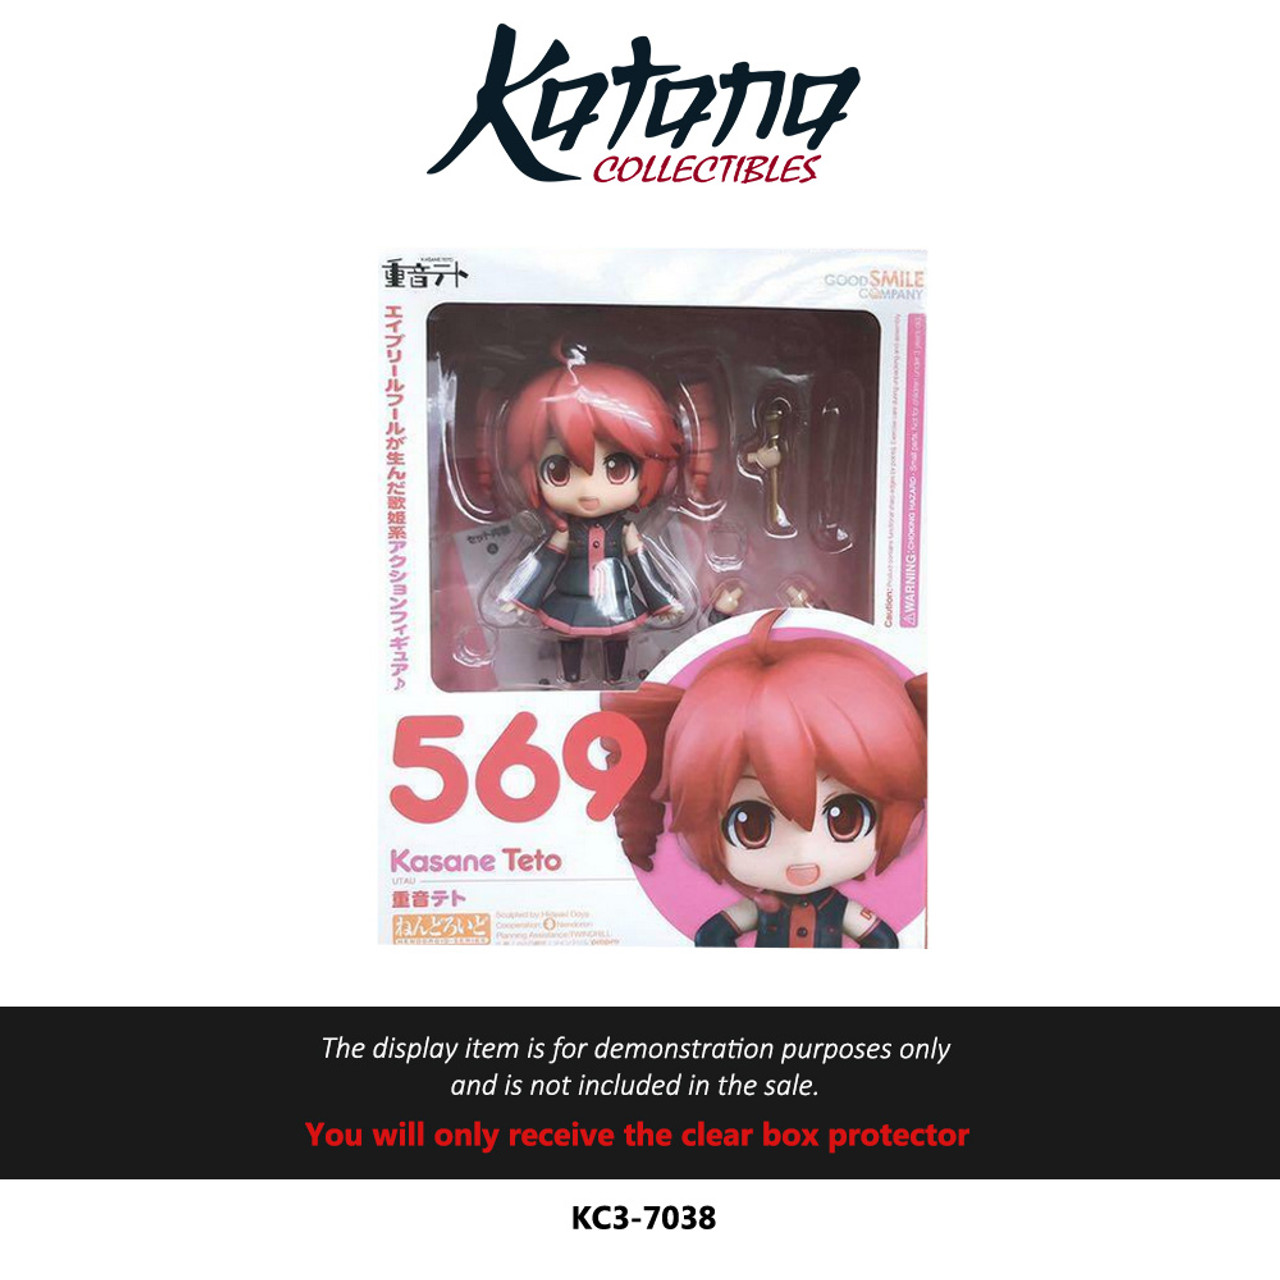 Katana Collectibles Protector For Nendoroid UTAU Kasane Teto 569